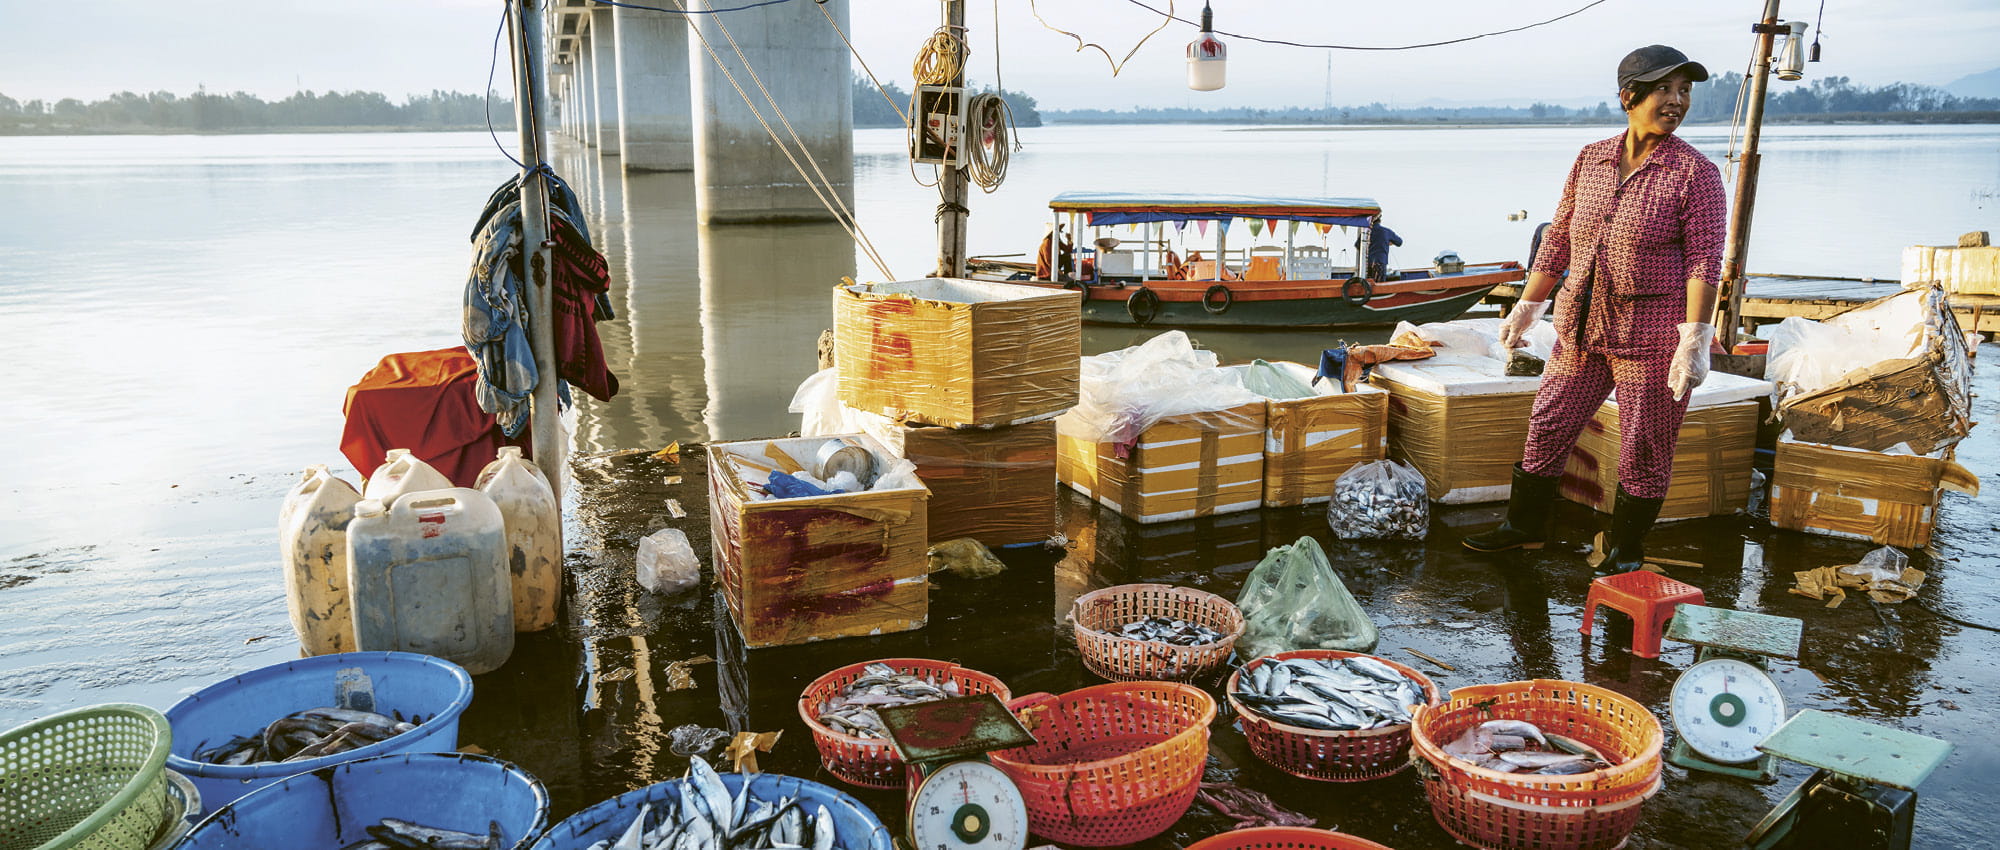 A women is standing next to buckets of fish. Copyright: iStock/Nikada